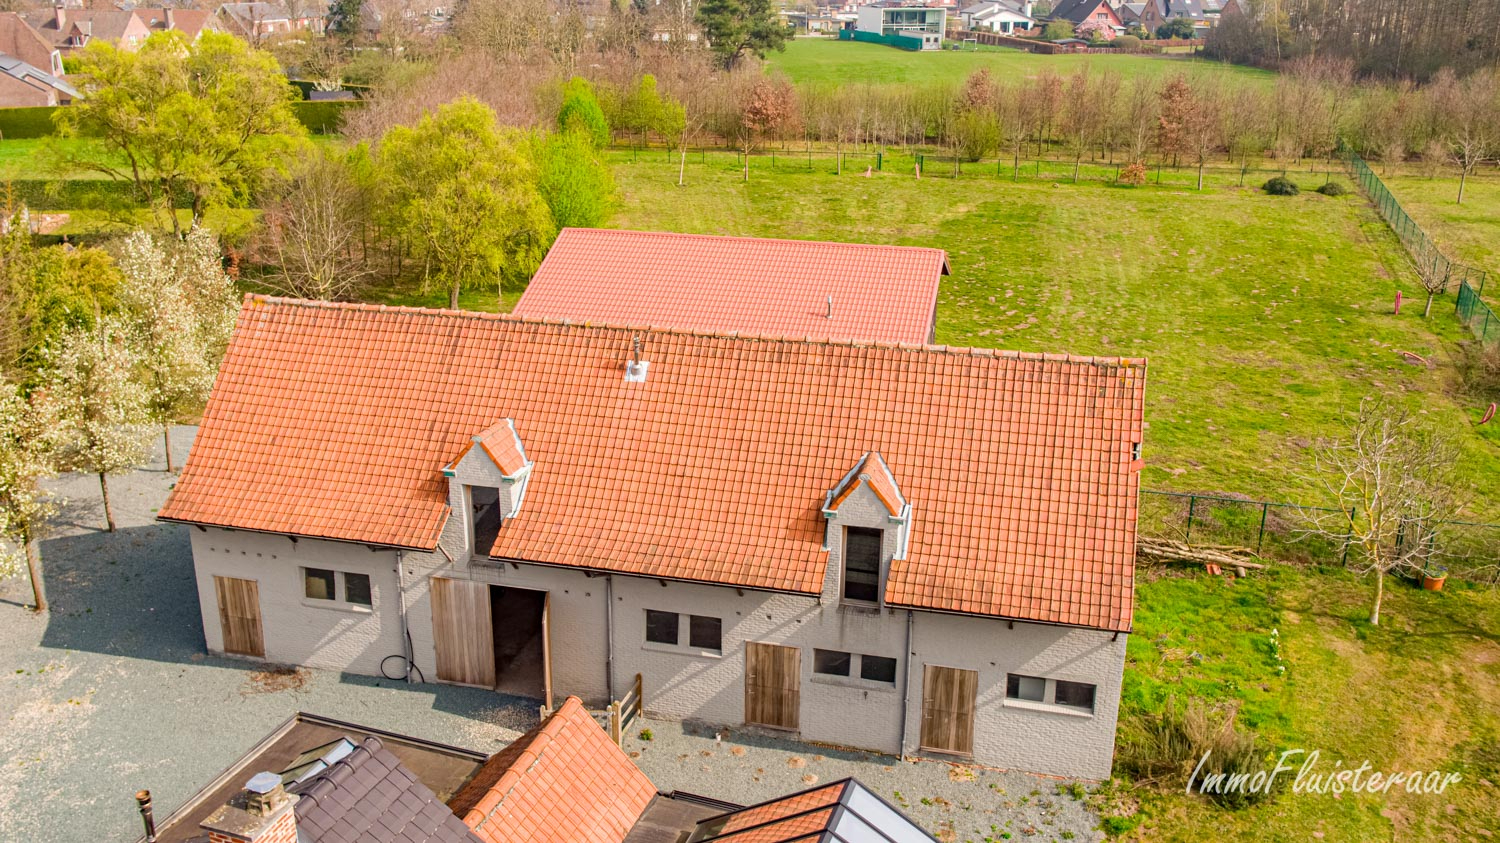 Property sold in Belsele